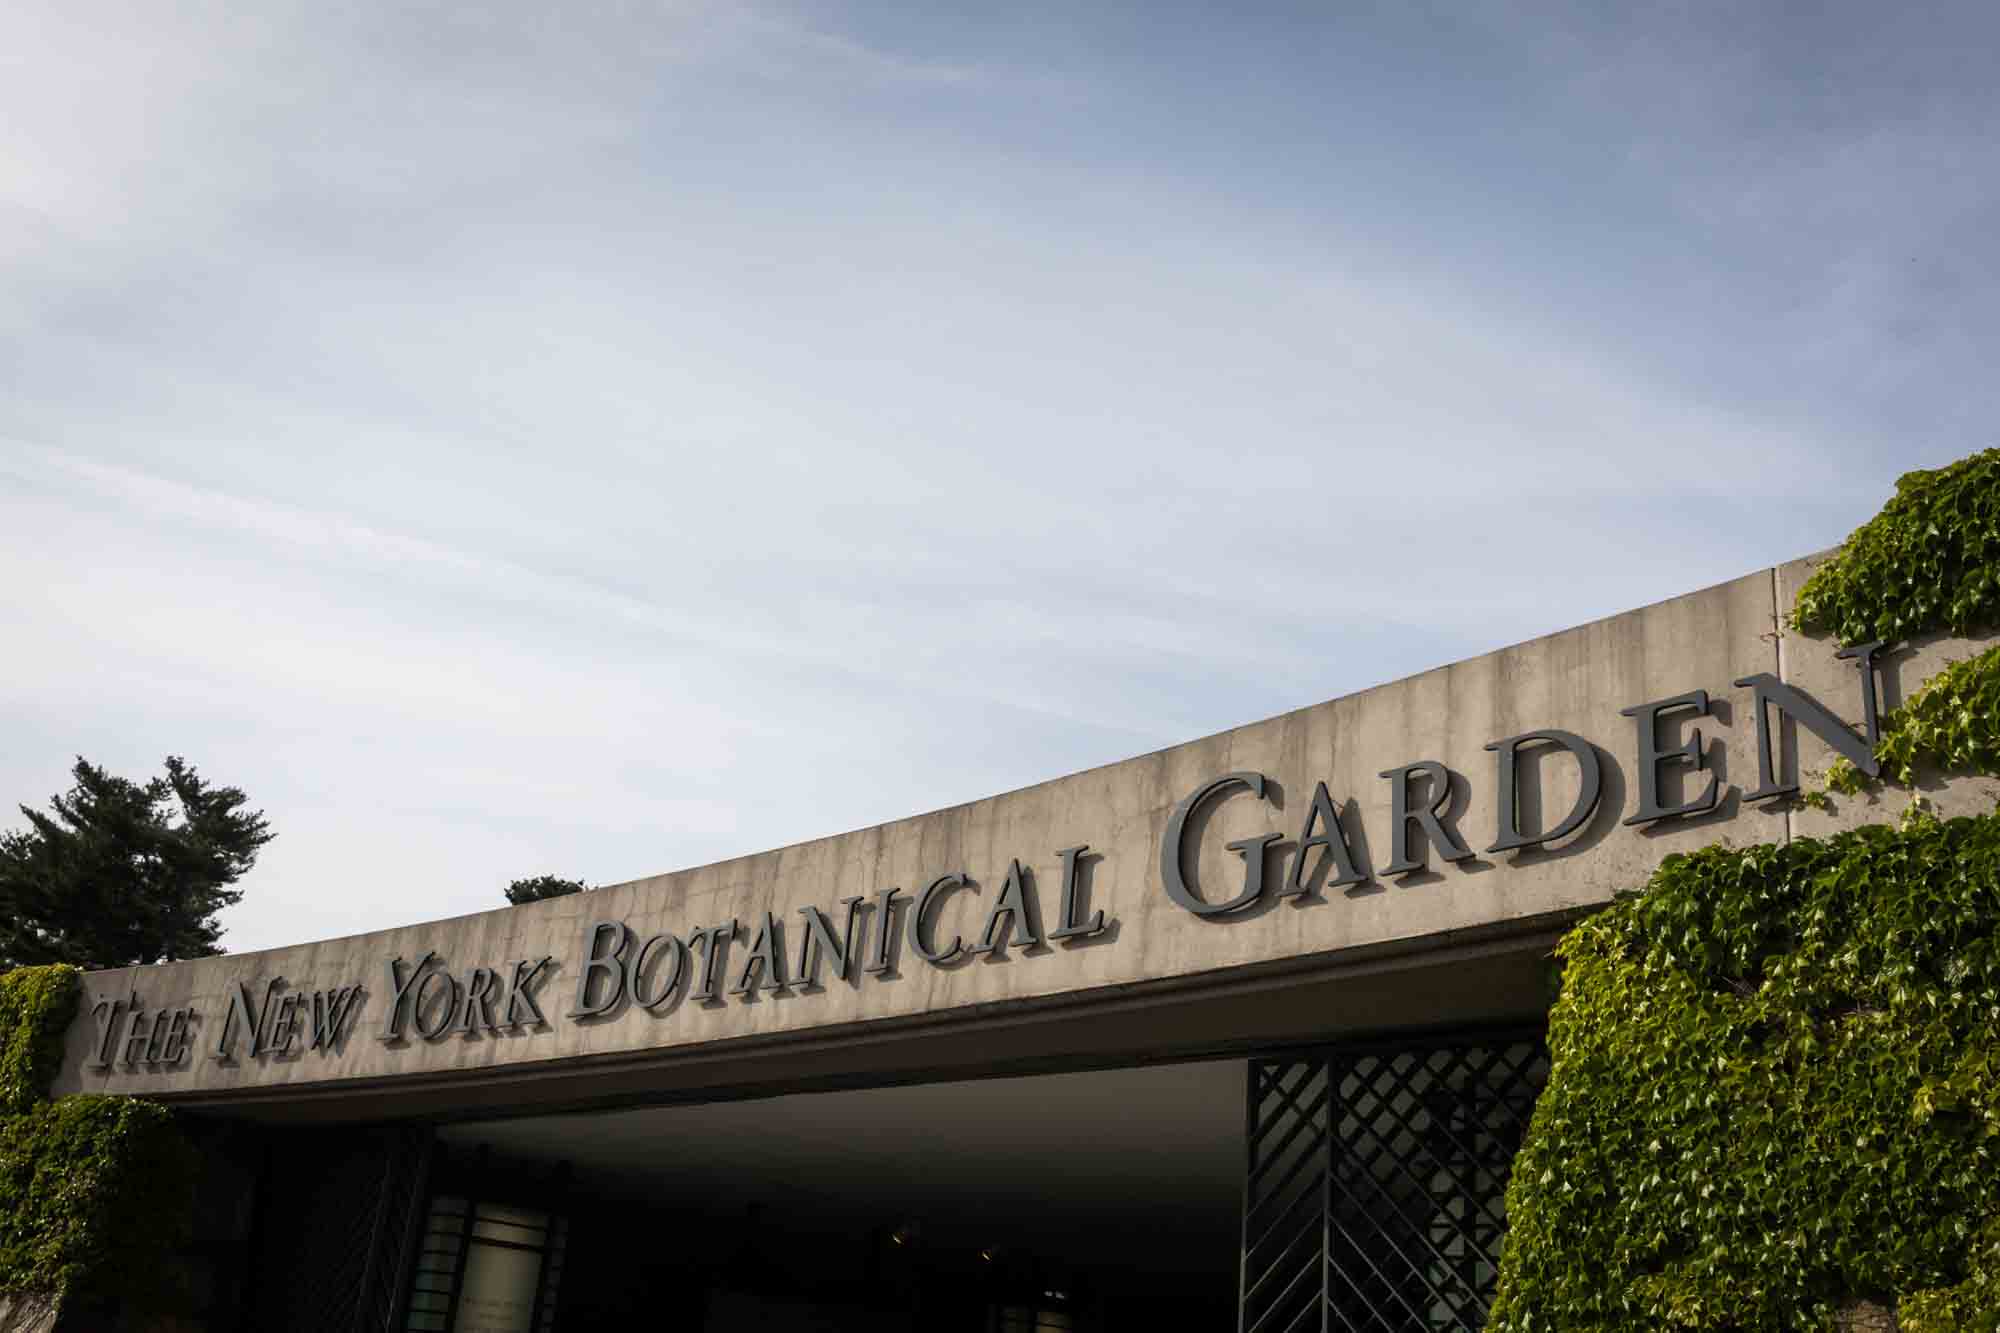 Signage for New York Botanical Gardens at main entrance